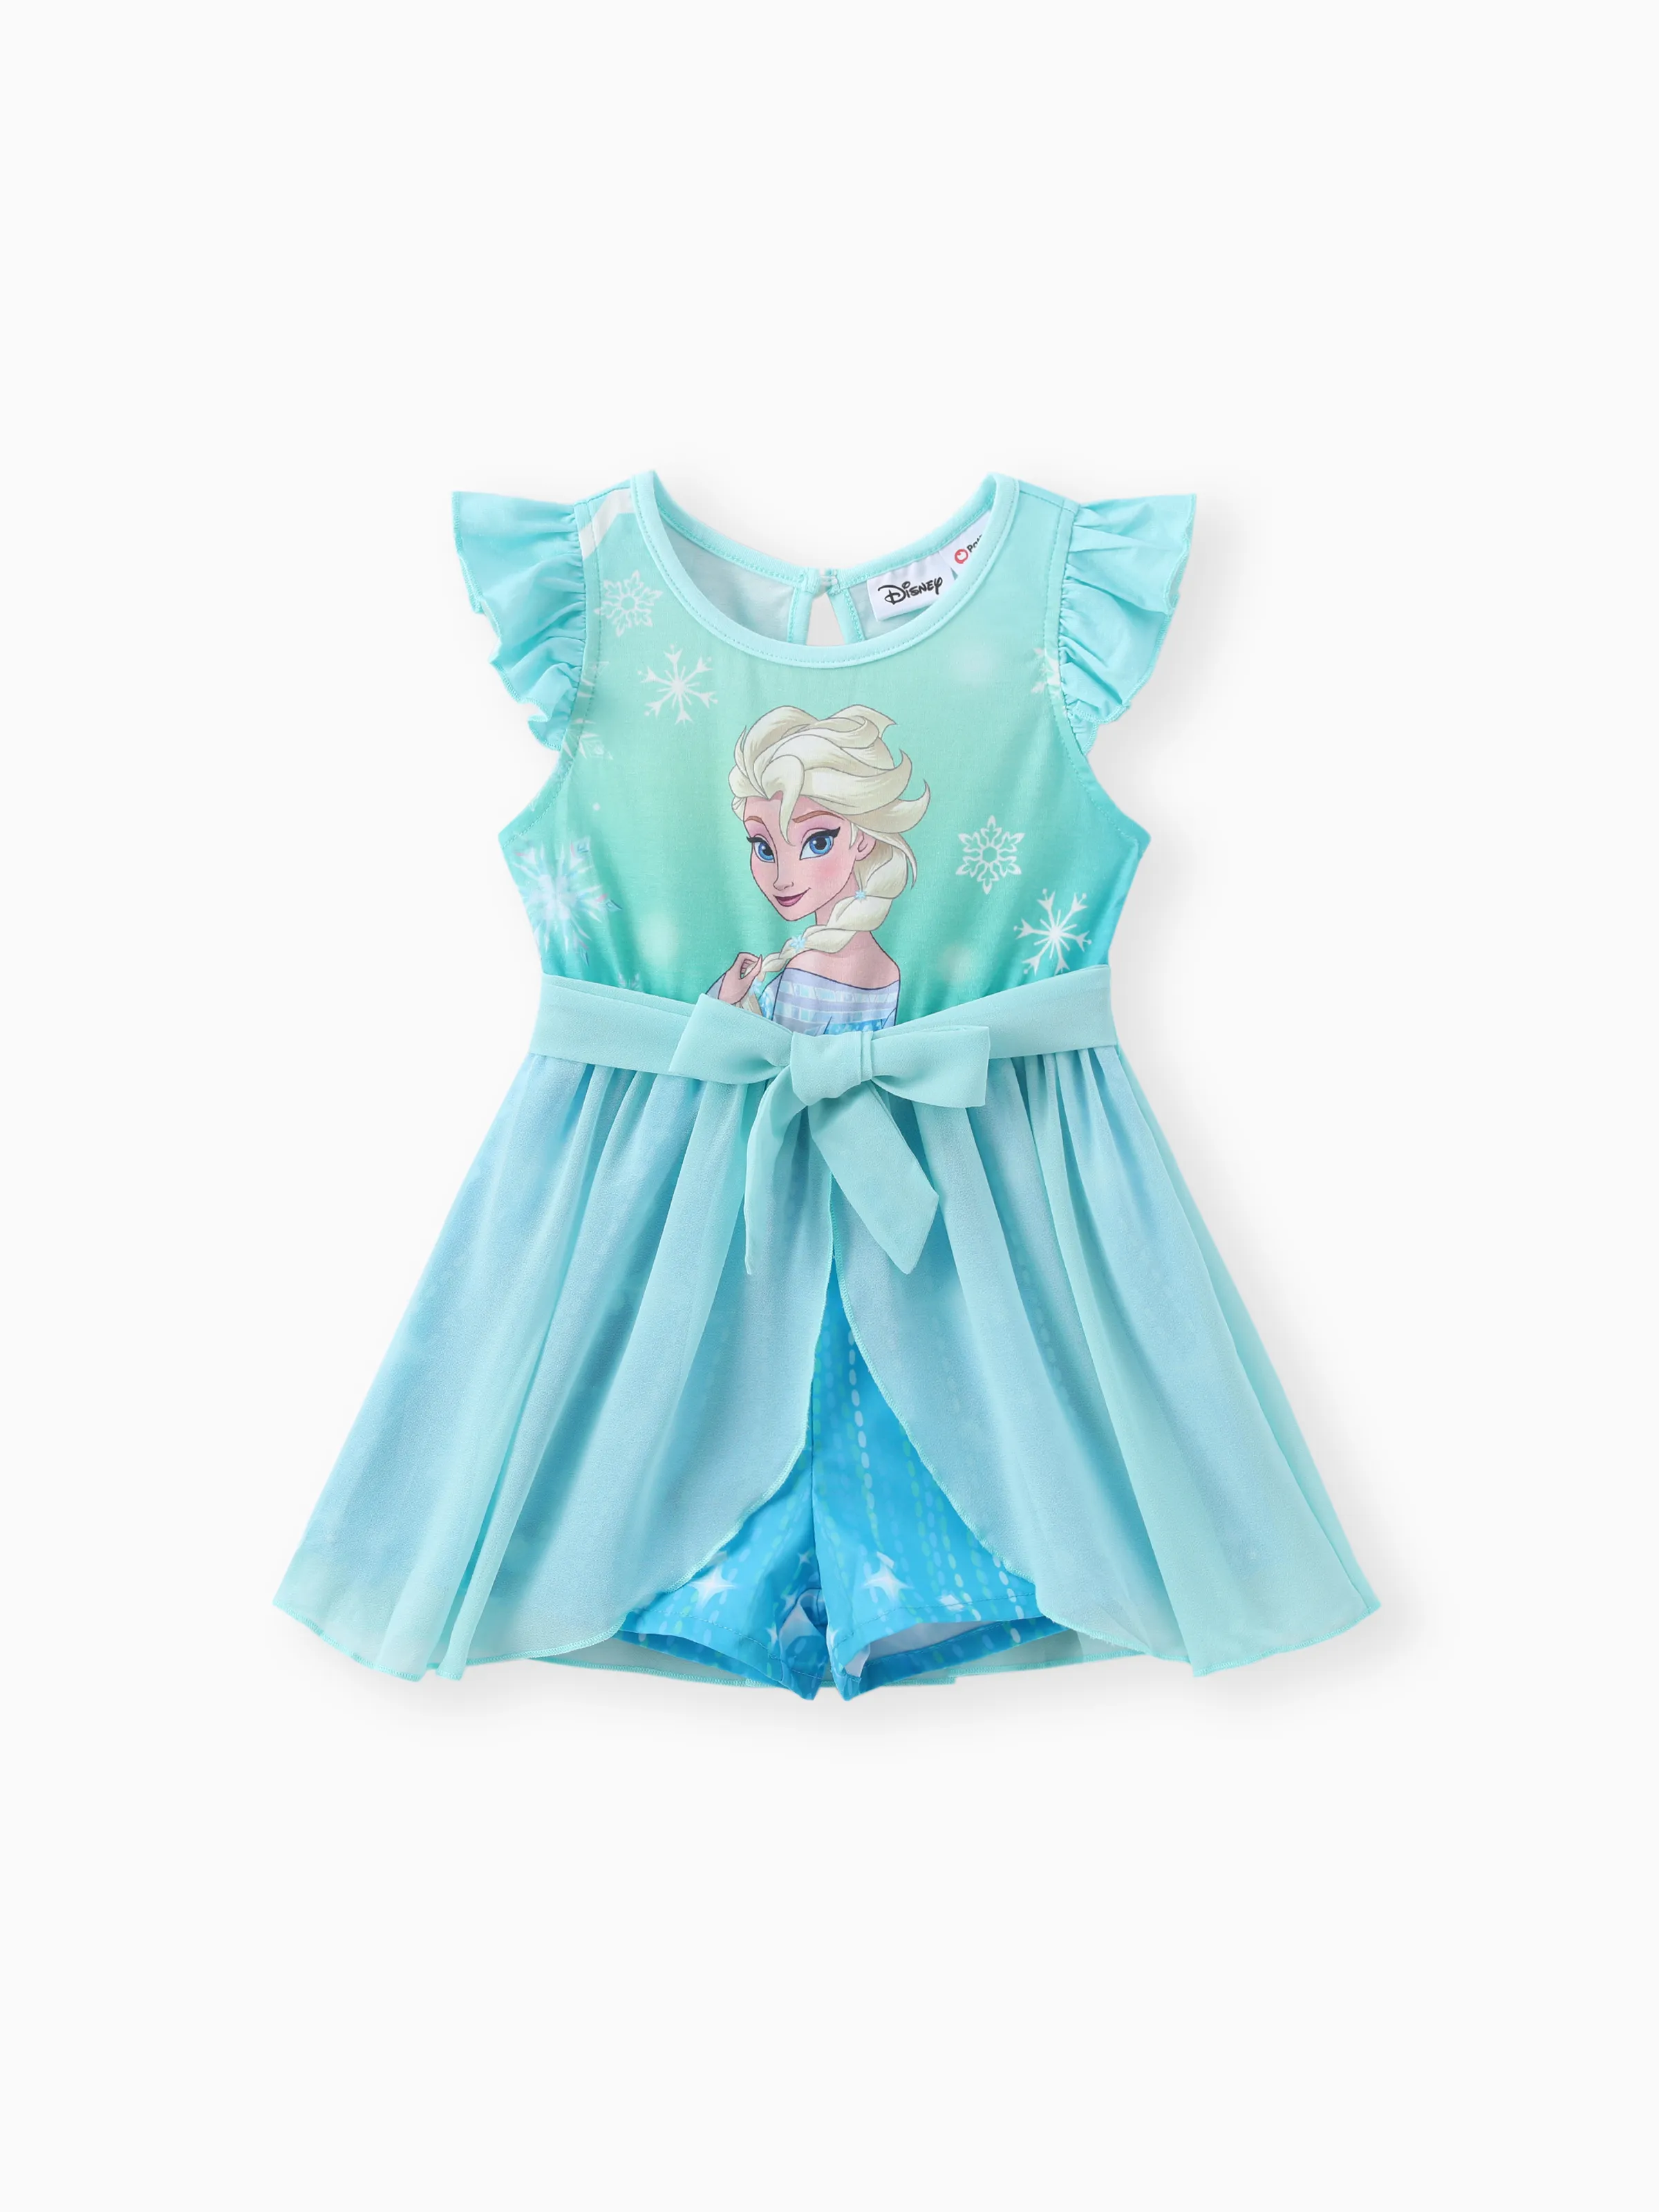 

Disney Frozen Elsa 1pc Toddler Girls Naia™ Character Print Ruffled Bowknot Mesh Romper